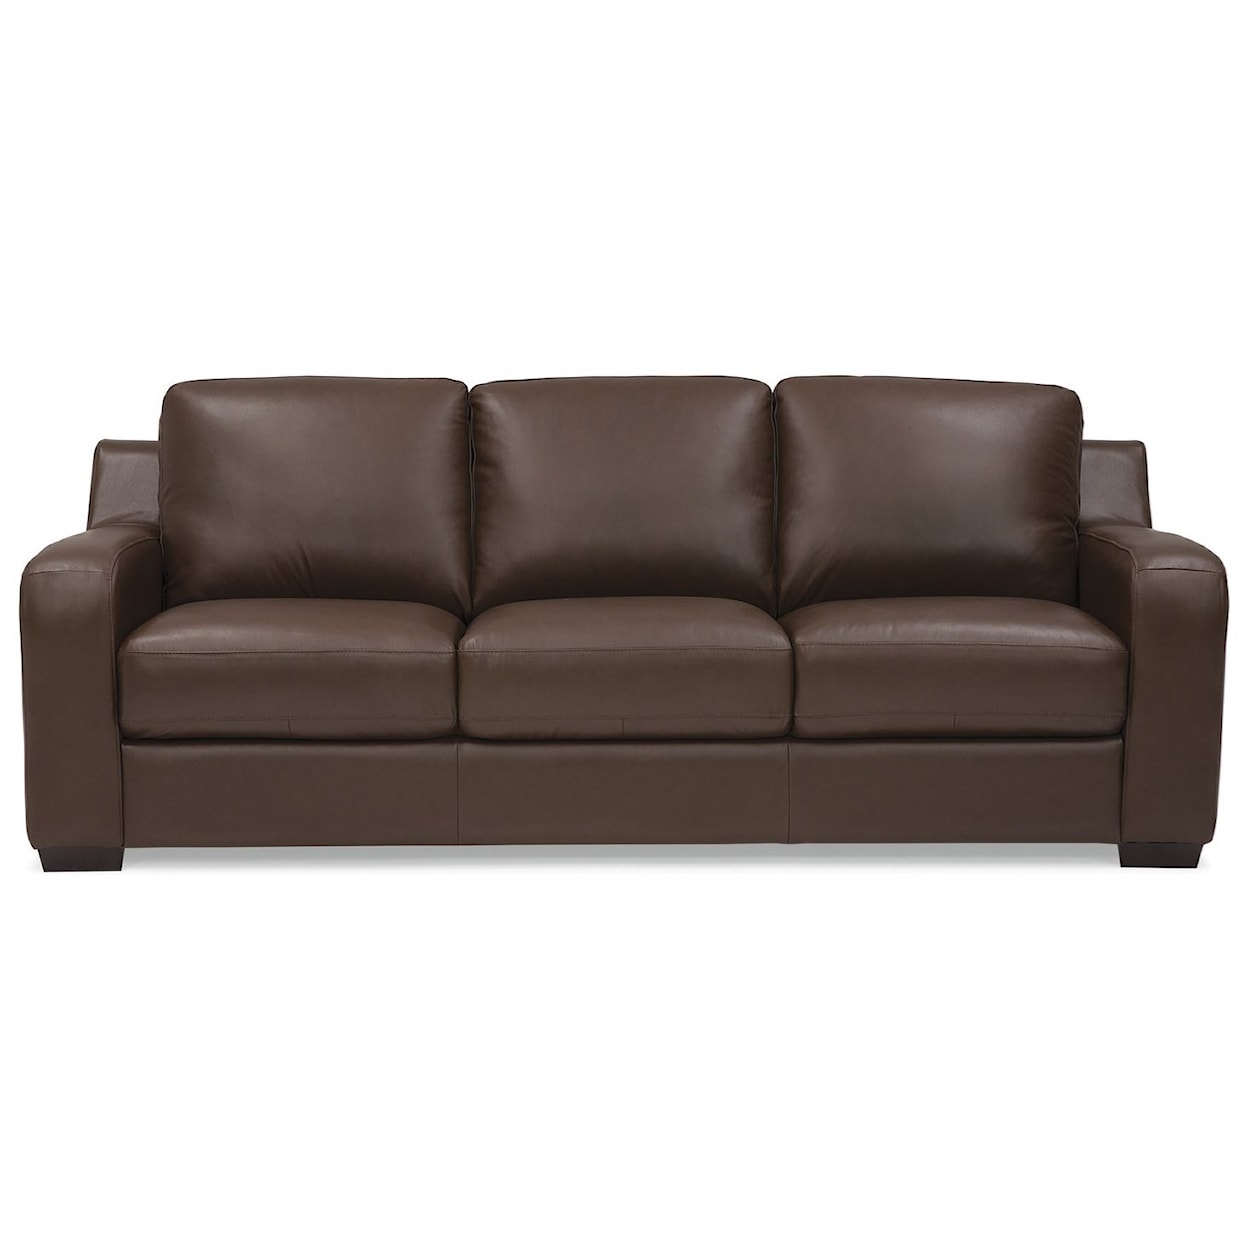 Palliser Flex Flex 3-Seat Sofa